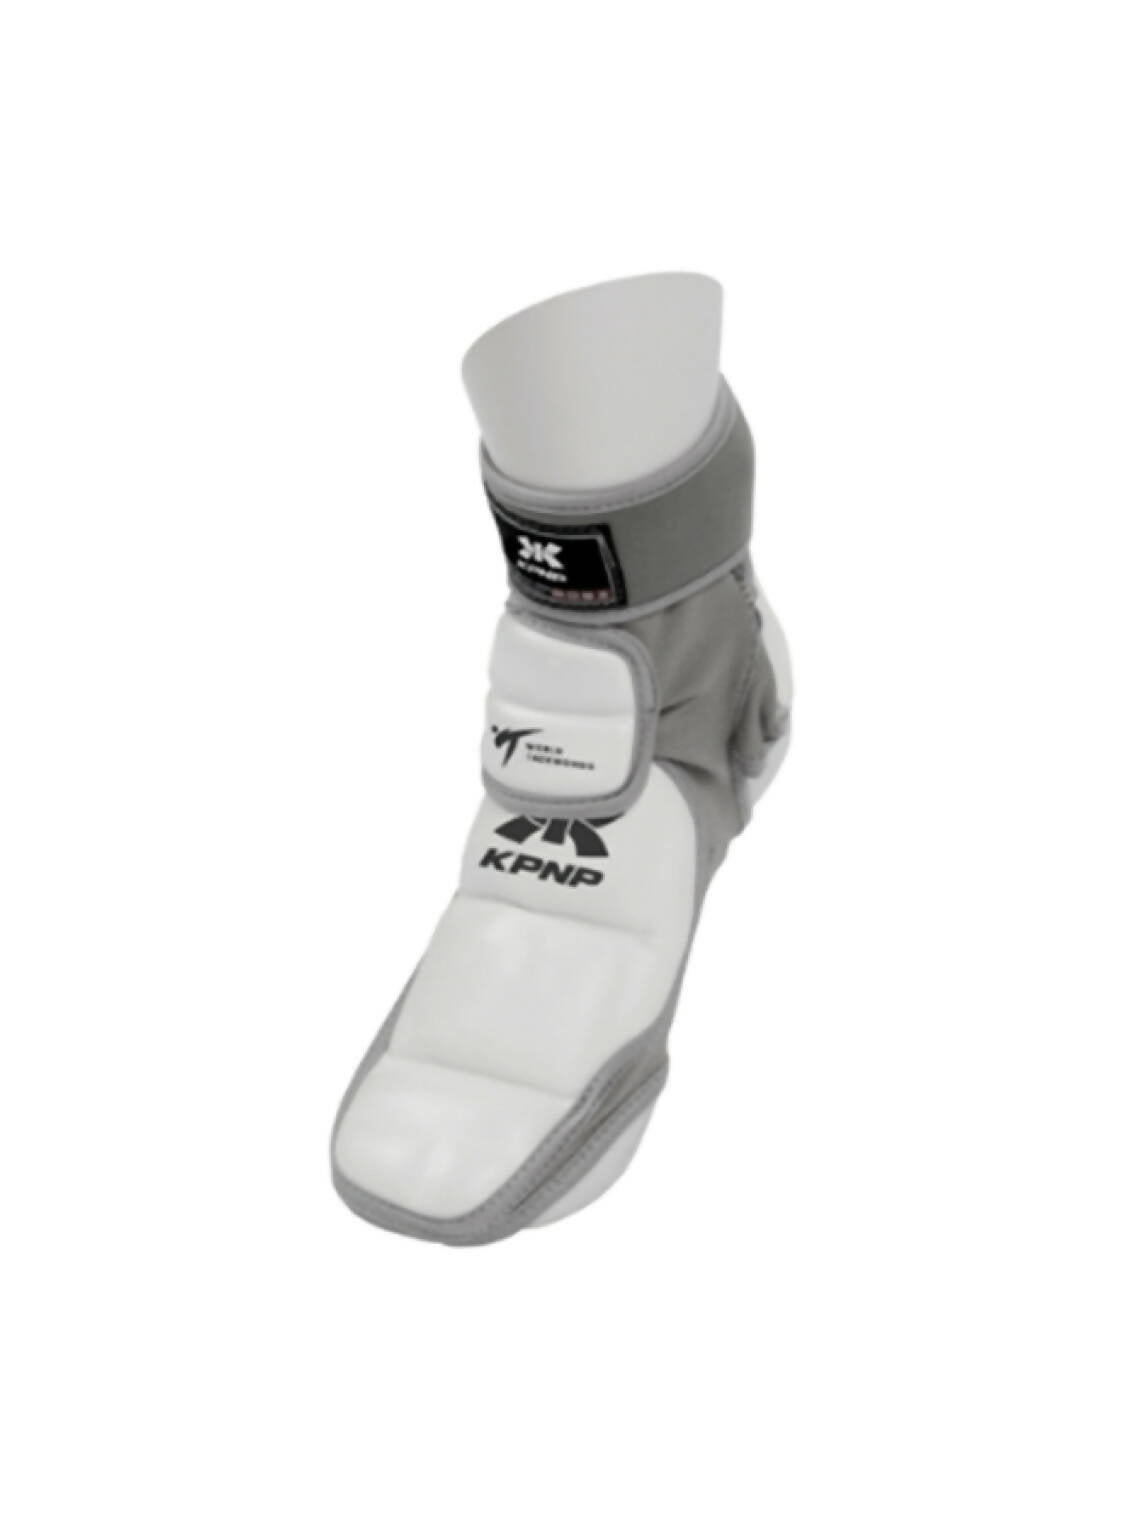 KPNP Electronic Foot Sensor - E-Socks - Martial Arts Item – My